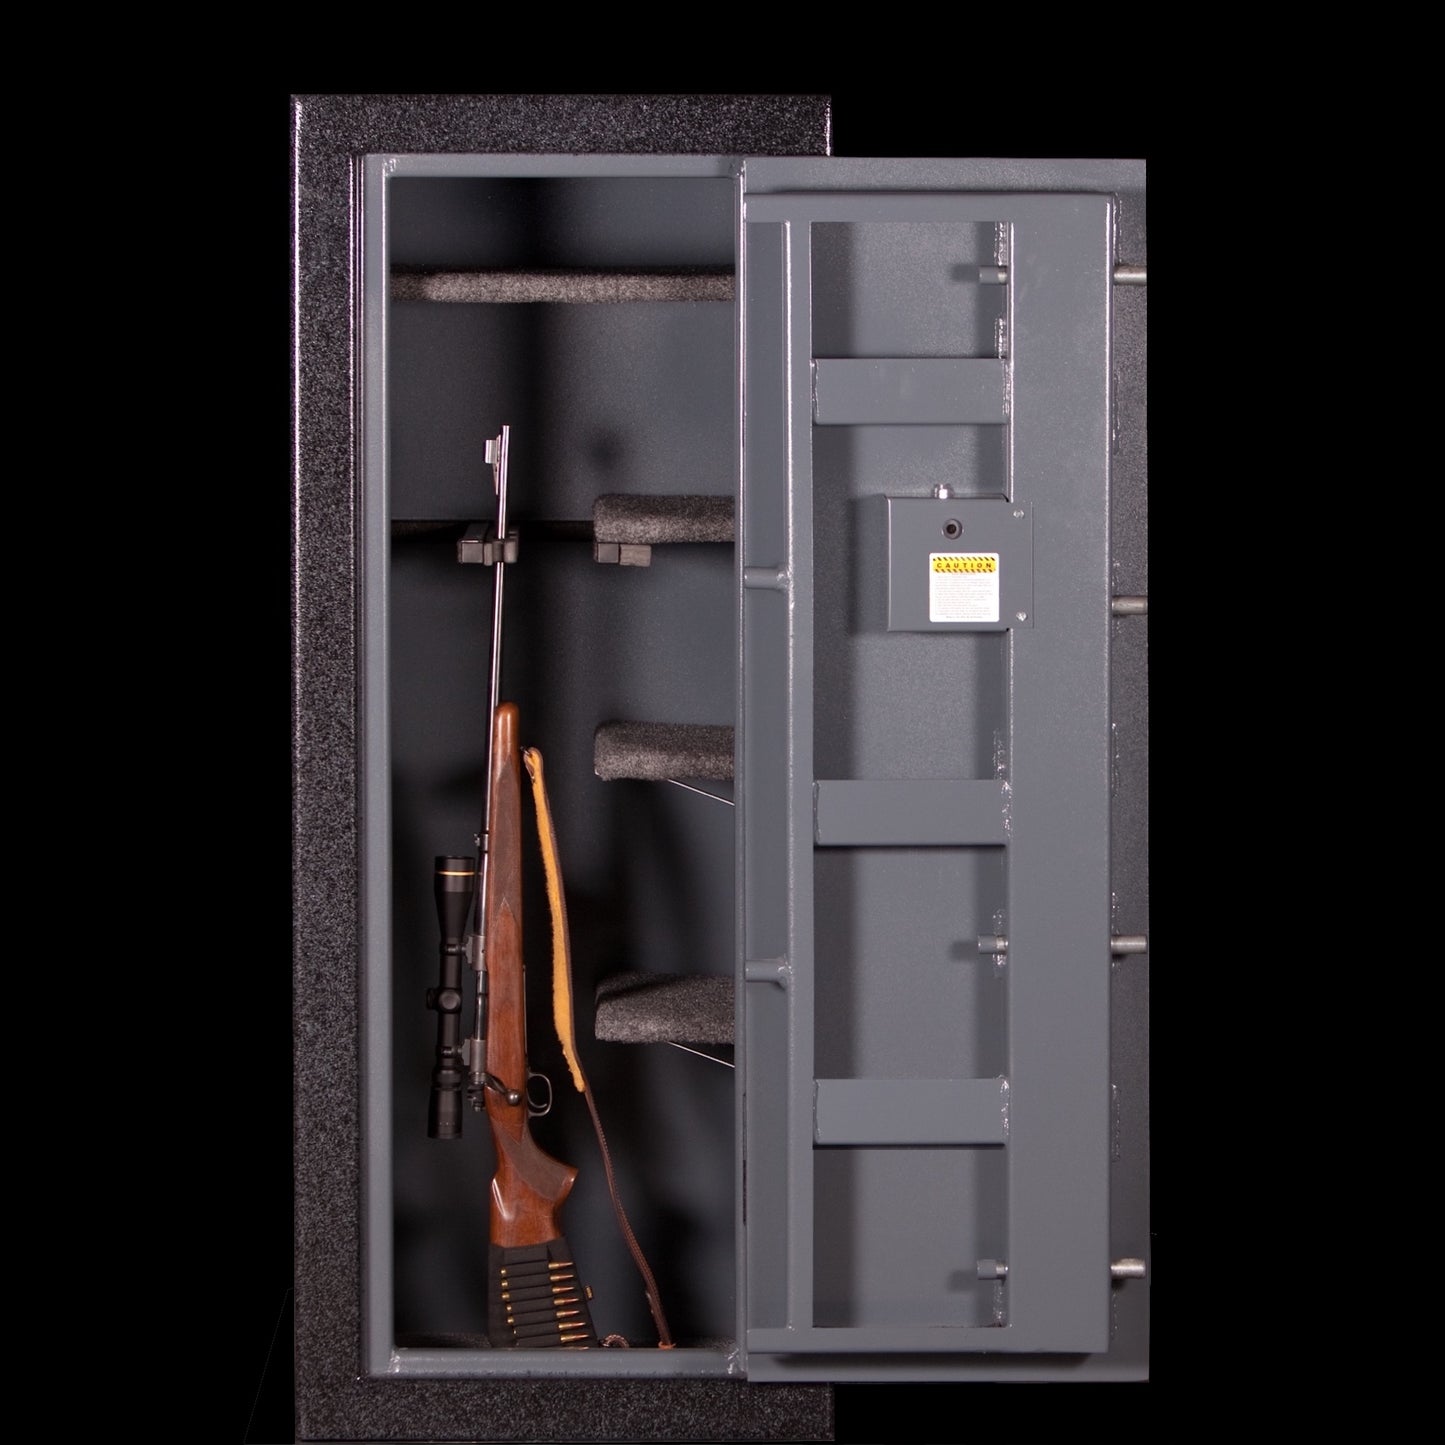 Open Gun Safe showing interior with guns